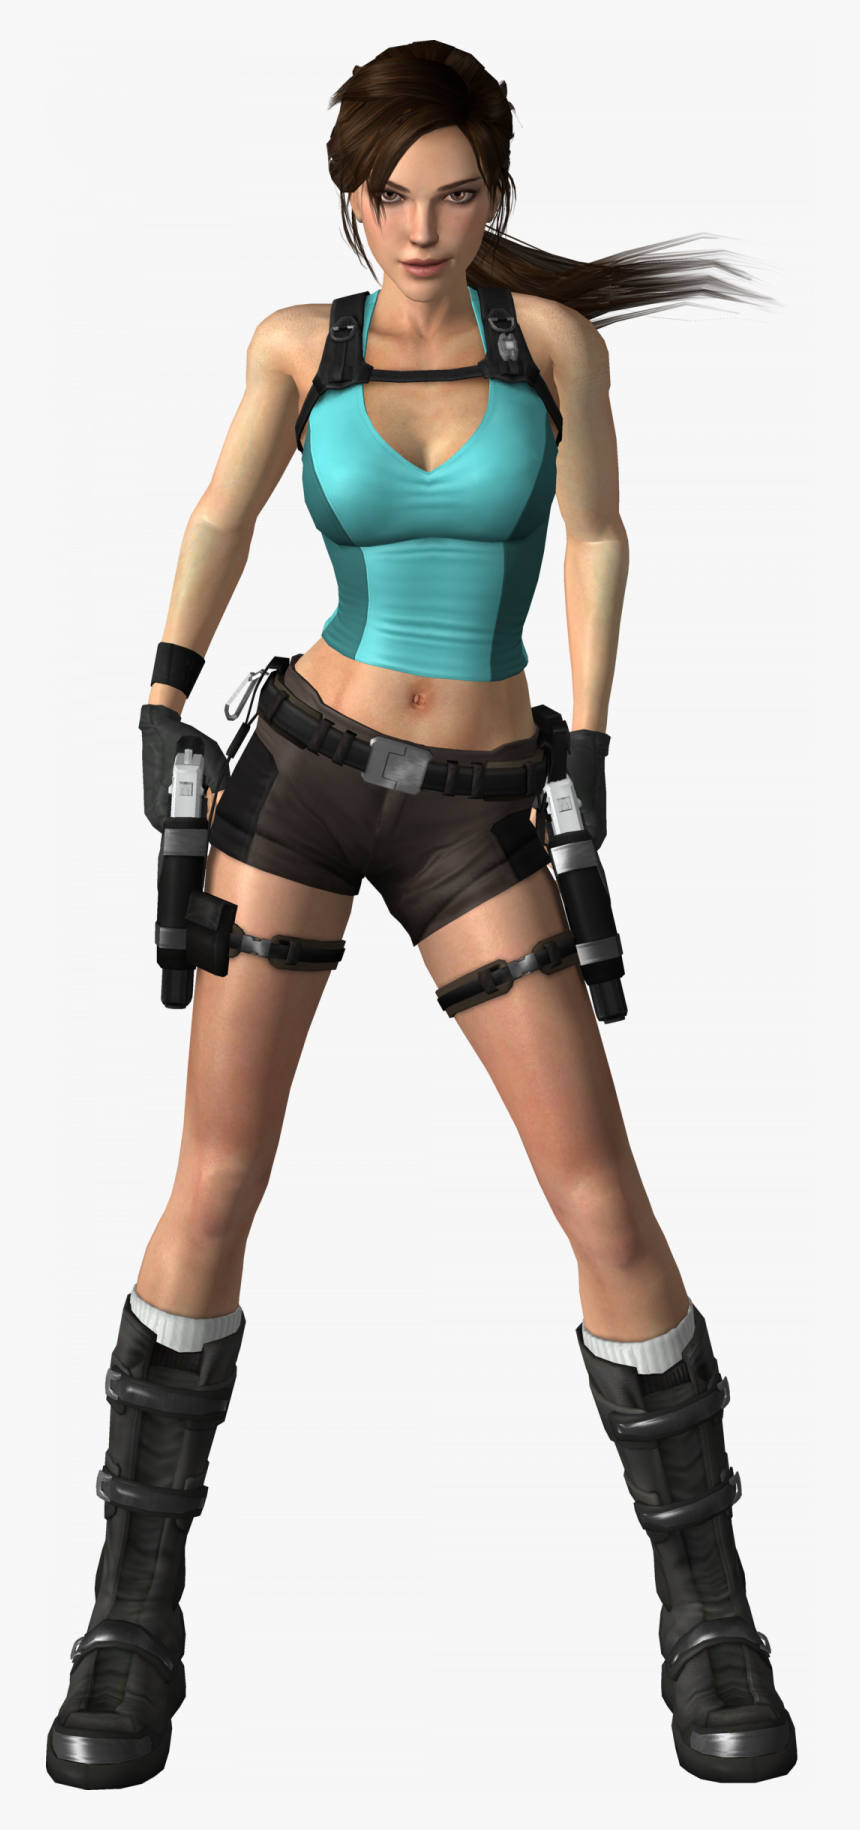 Download For Free Lara Croft Png In High Resolution - Super Smash Bros Ultimate Lara Croft, Transparent Png, Free Download